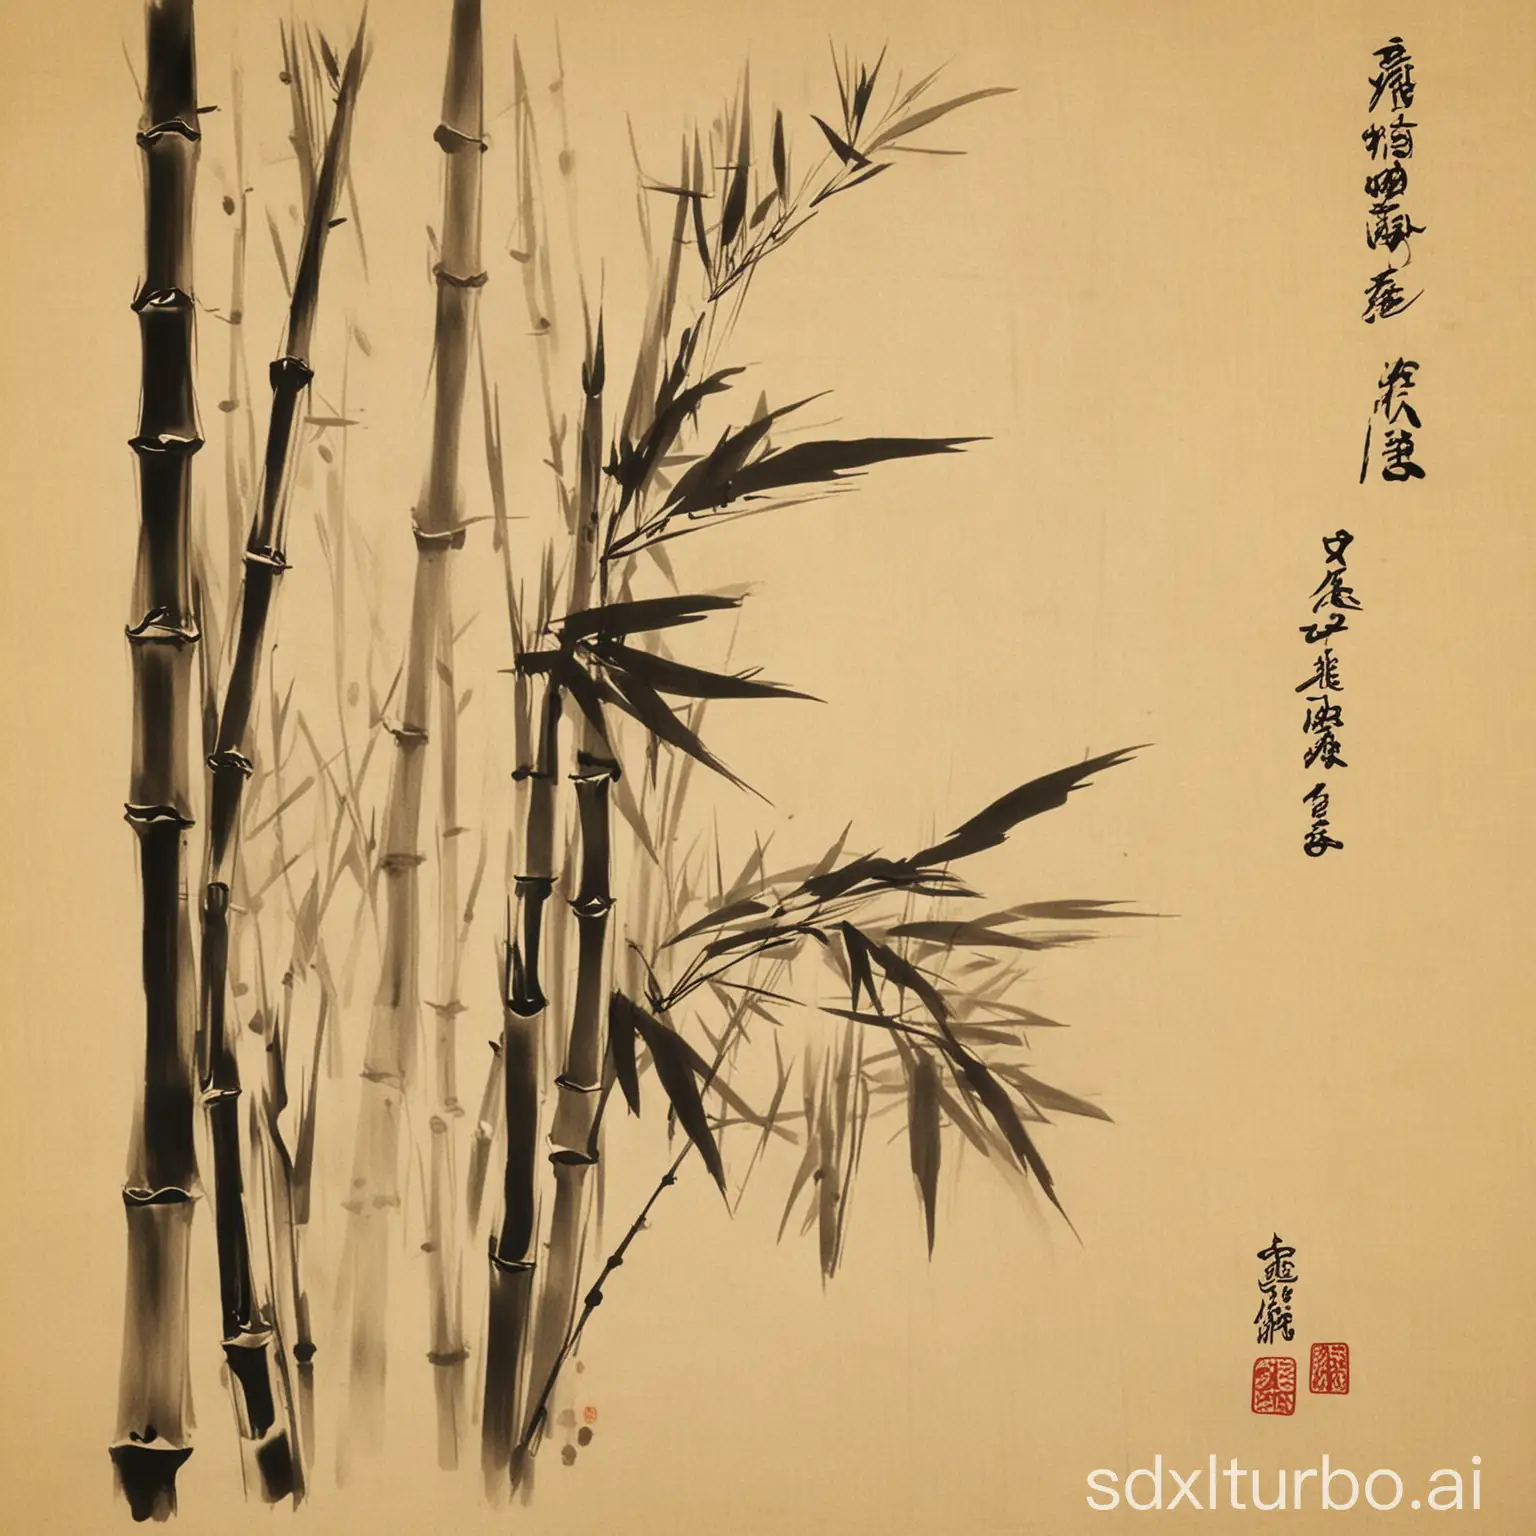 bamboo hand drawang, sumie style